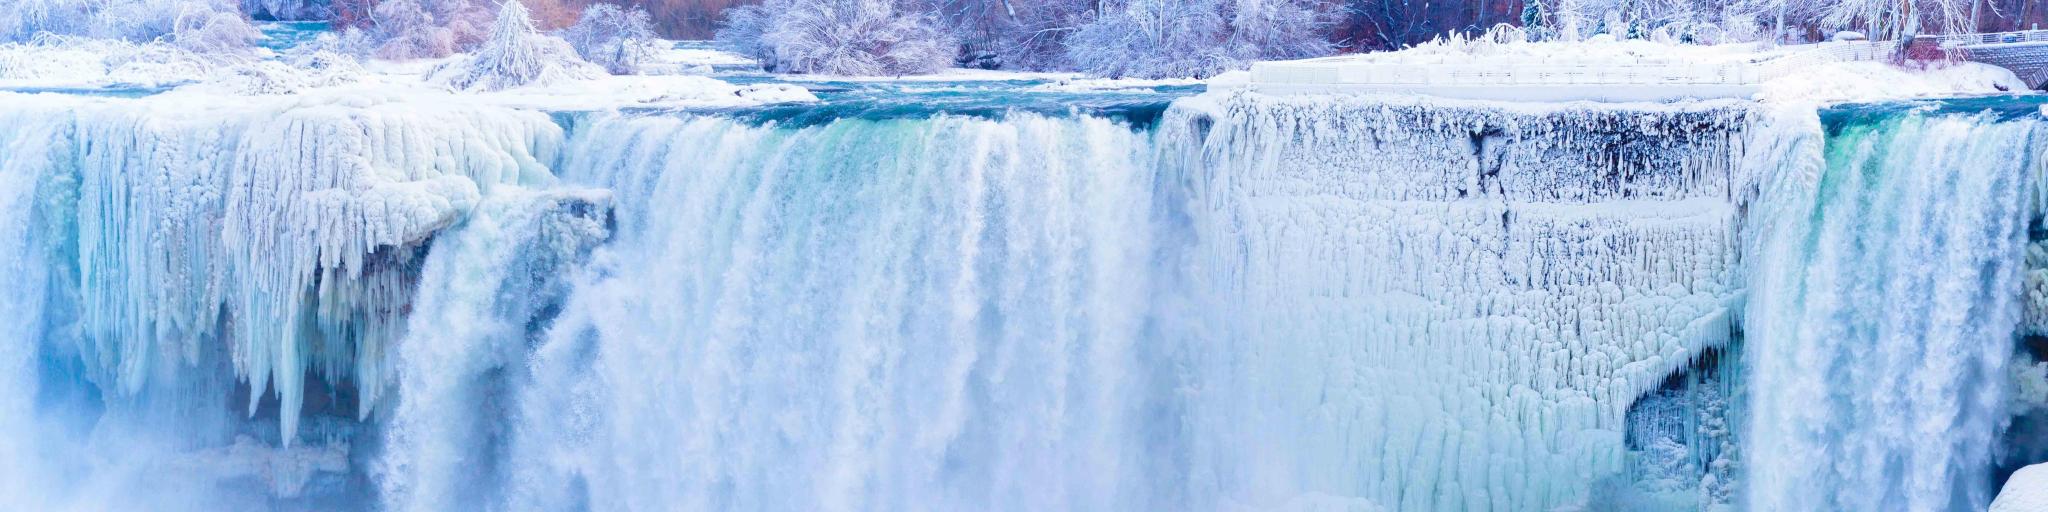 Niagara Falls frozen during deep winter.